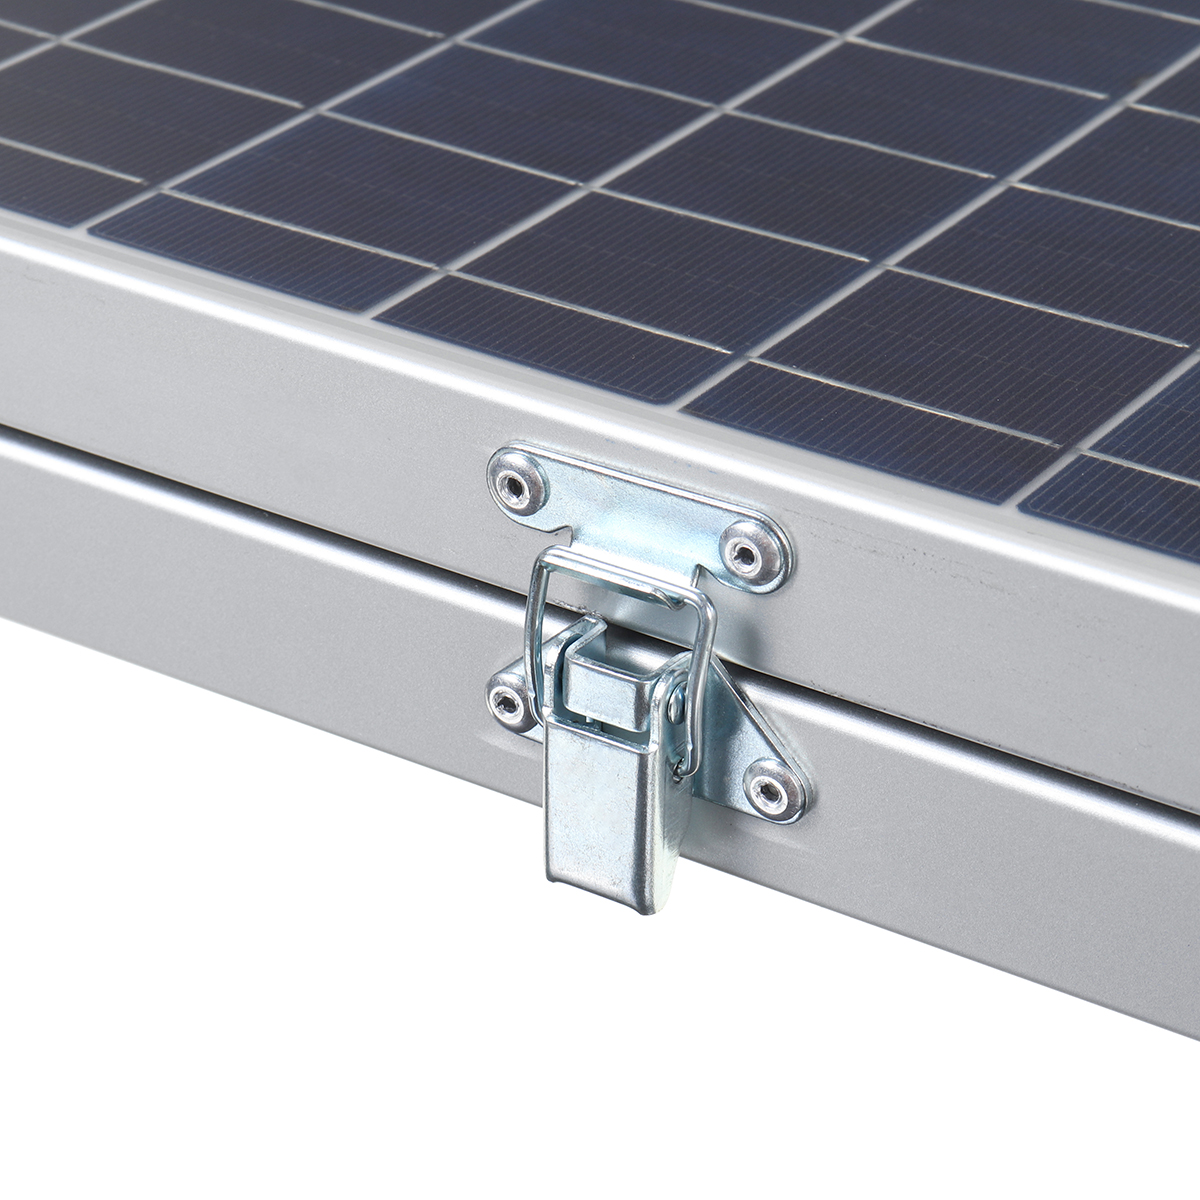 80W-Solar-Panel-Monocrystalline-Silicon-Cell-With-Solar-Controller-1661359-10